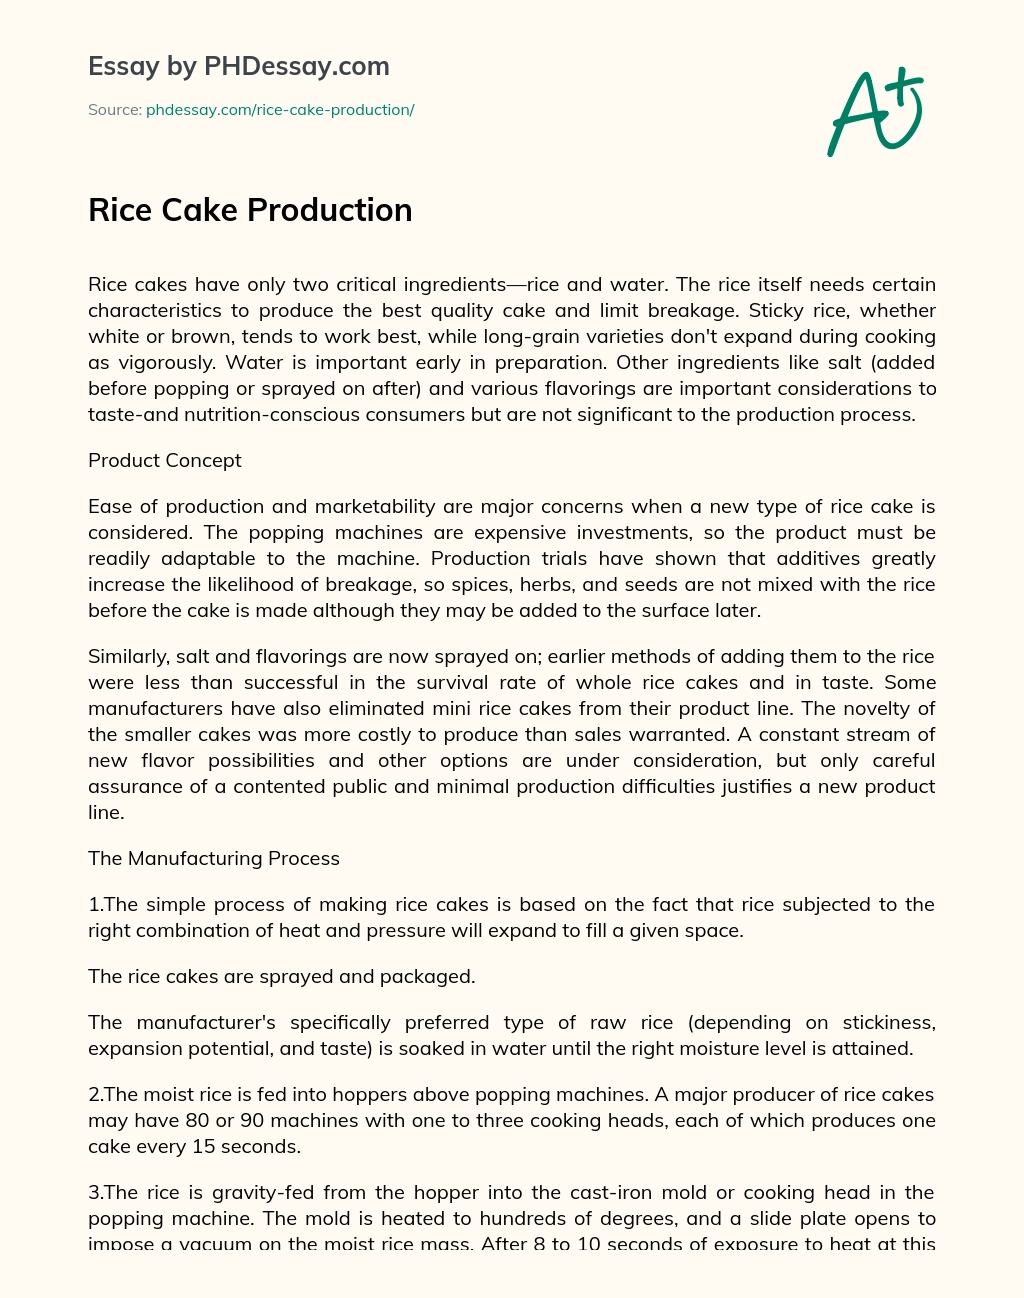 Rice Cake Production essay